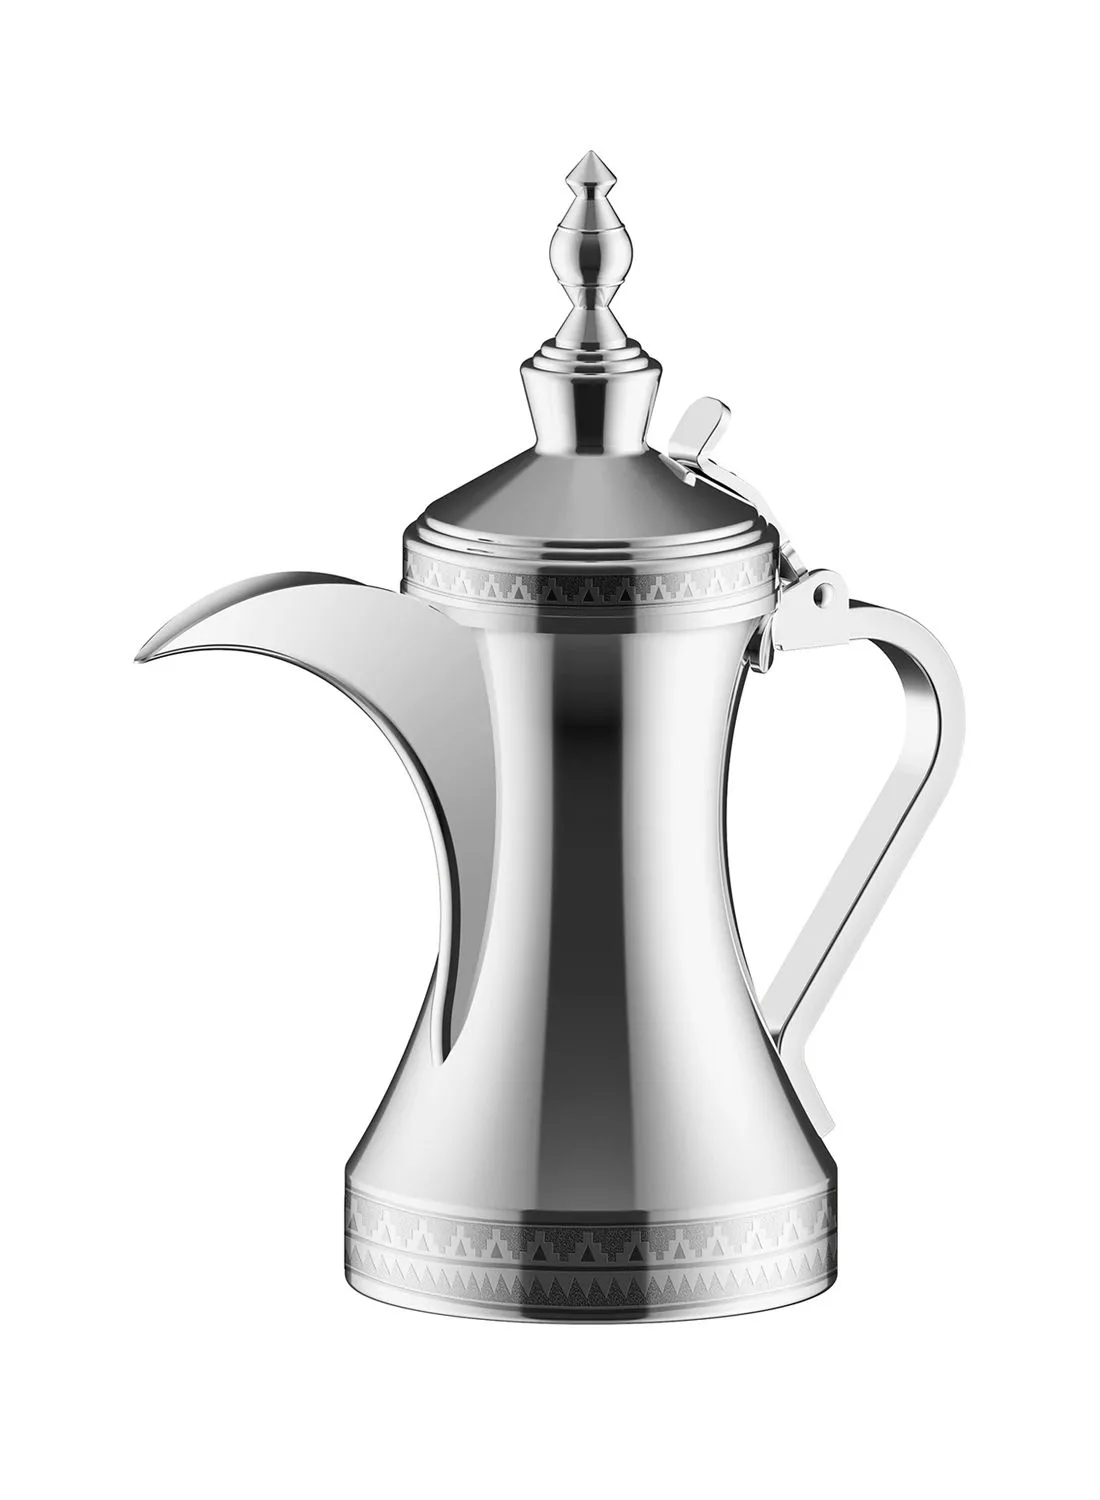 Alsaif Stainless Steel Arabic Coffee Dallah Chrome